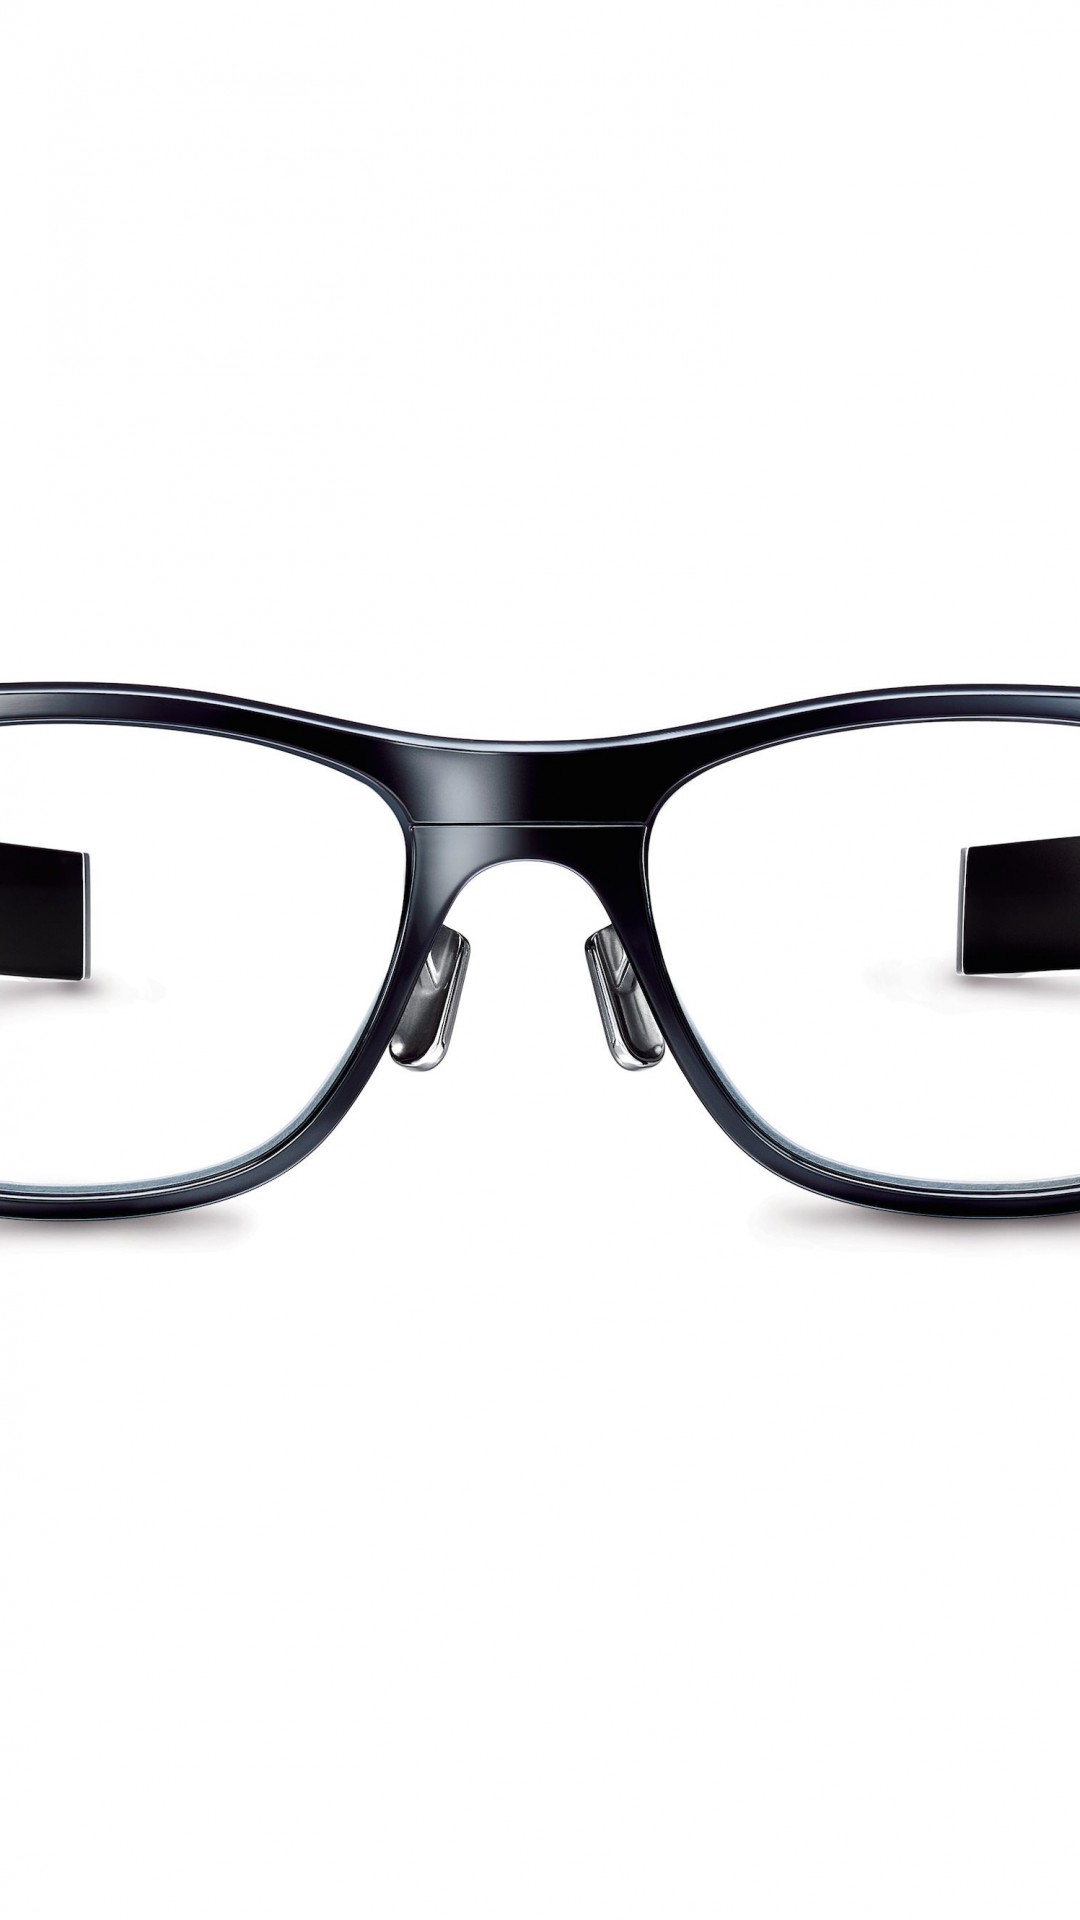 Jins Meme Smart Glasses Wallpaper for LG G2